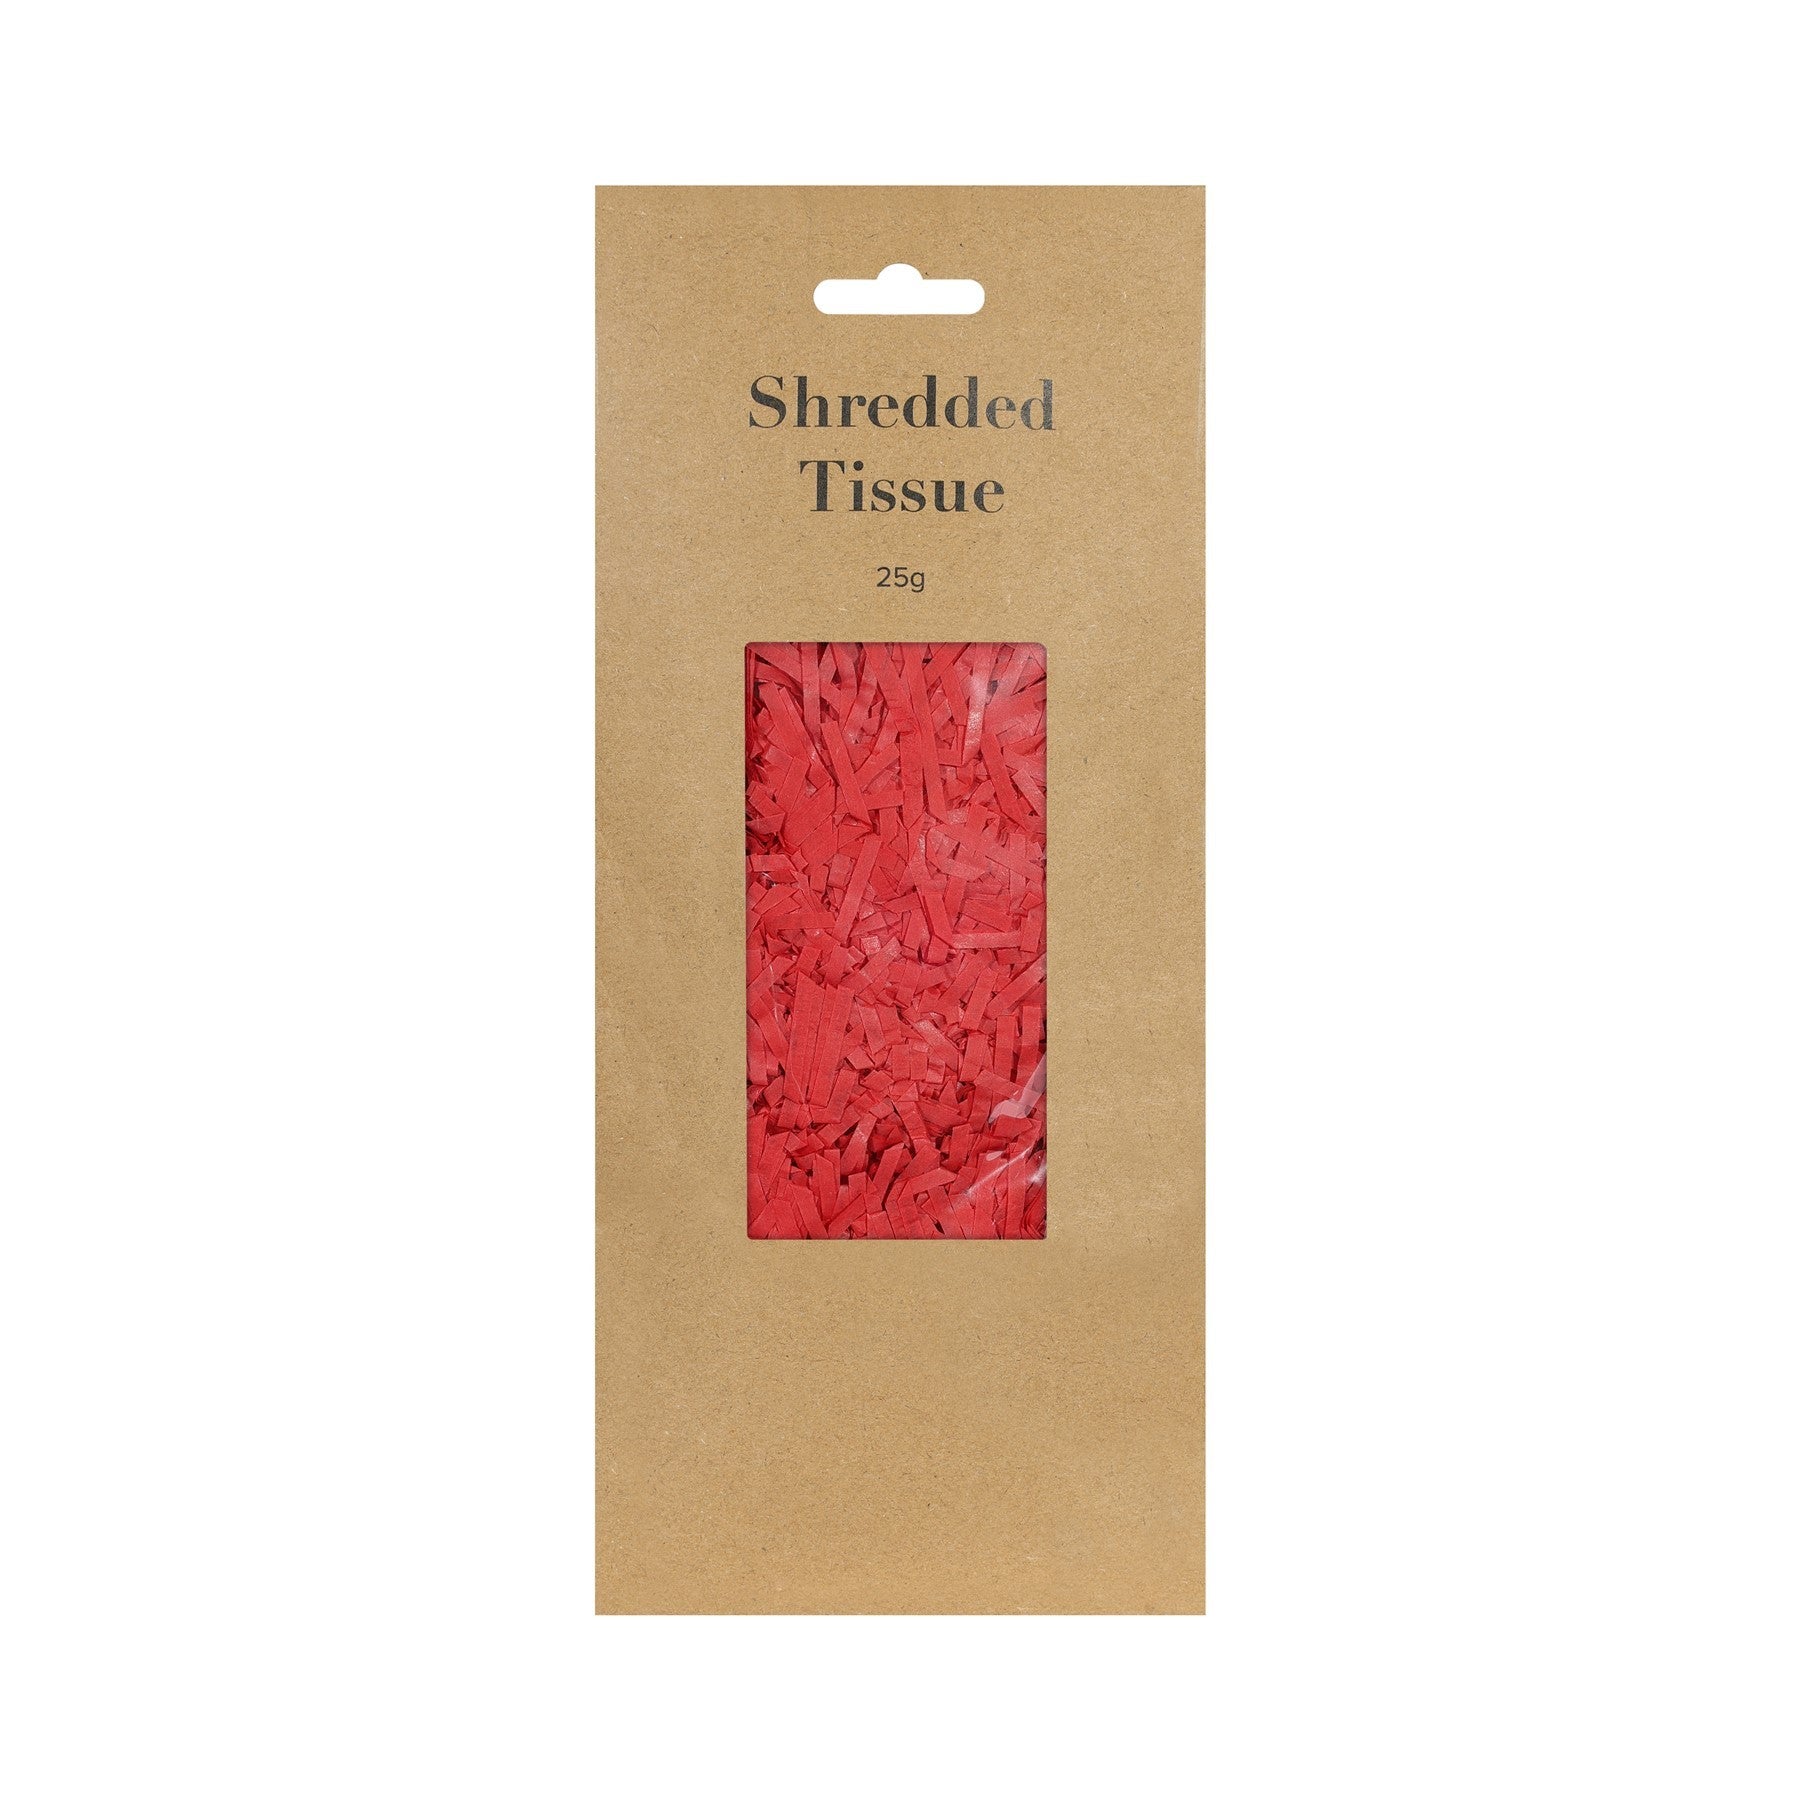 View Red Shredded Tissue 25 grams information